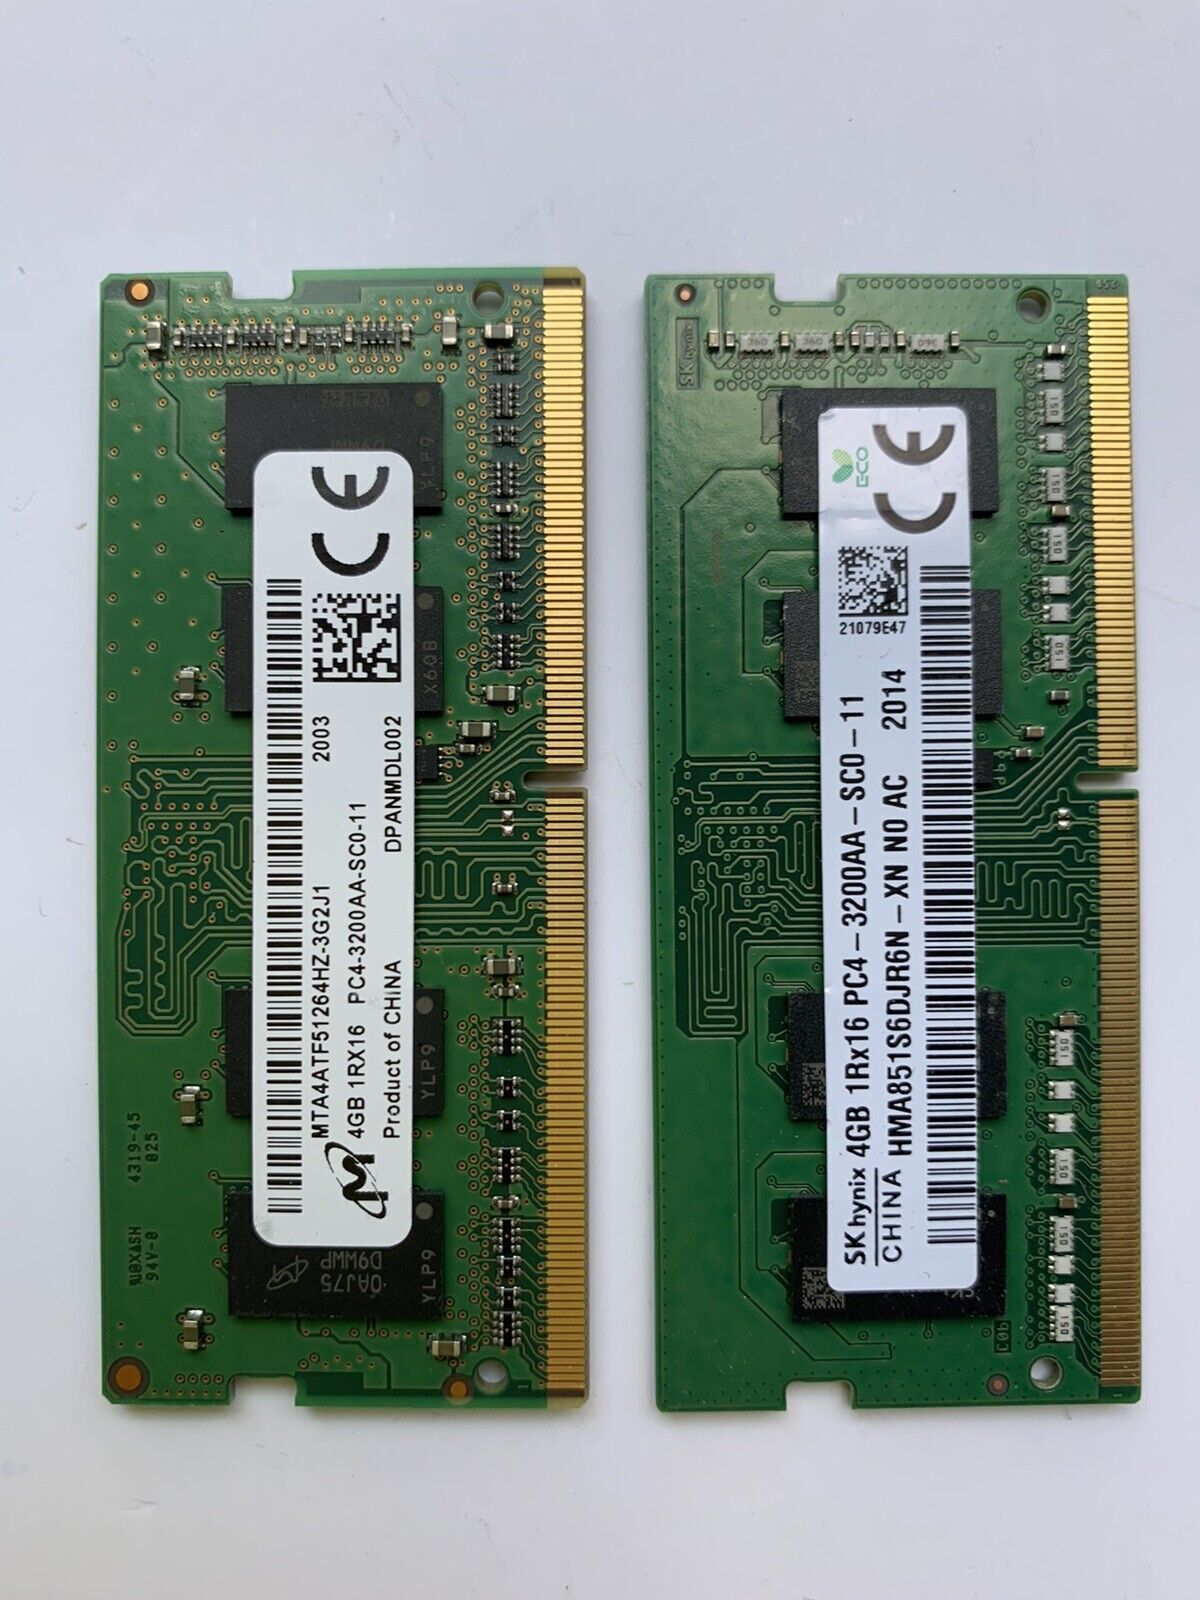 Lot of 2 modules x 4GB Micron/SK Hynix PC4-3200AA 1Rx16 Laptop Memory SODIMM Ram